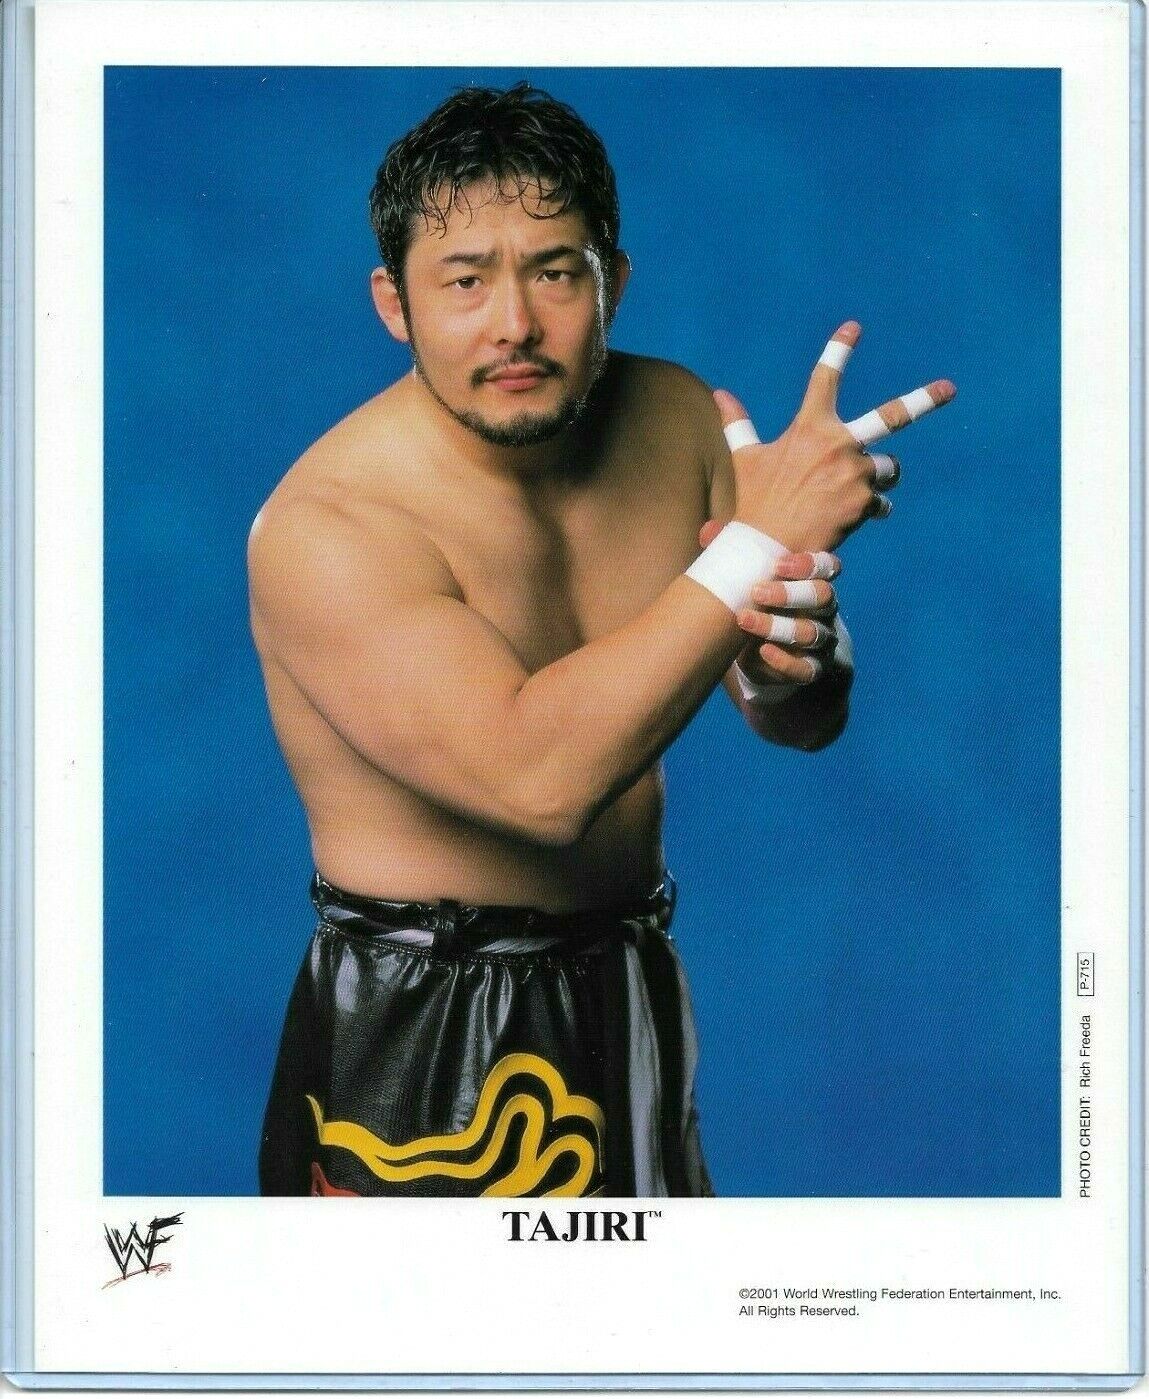 WWE TAJIRI P-715 OFFICIAL LICENSED AUTHENTIC ORIGINAL 8X10 PROMO Photo Poster painting VERY RARE